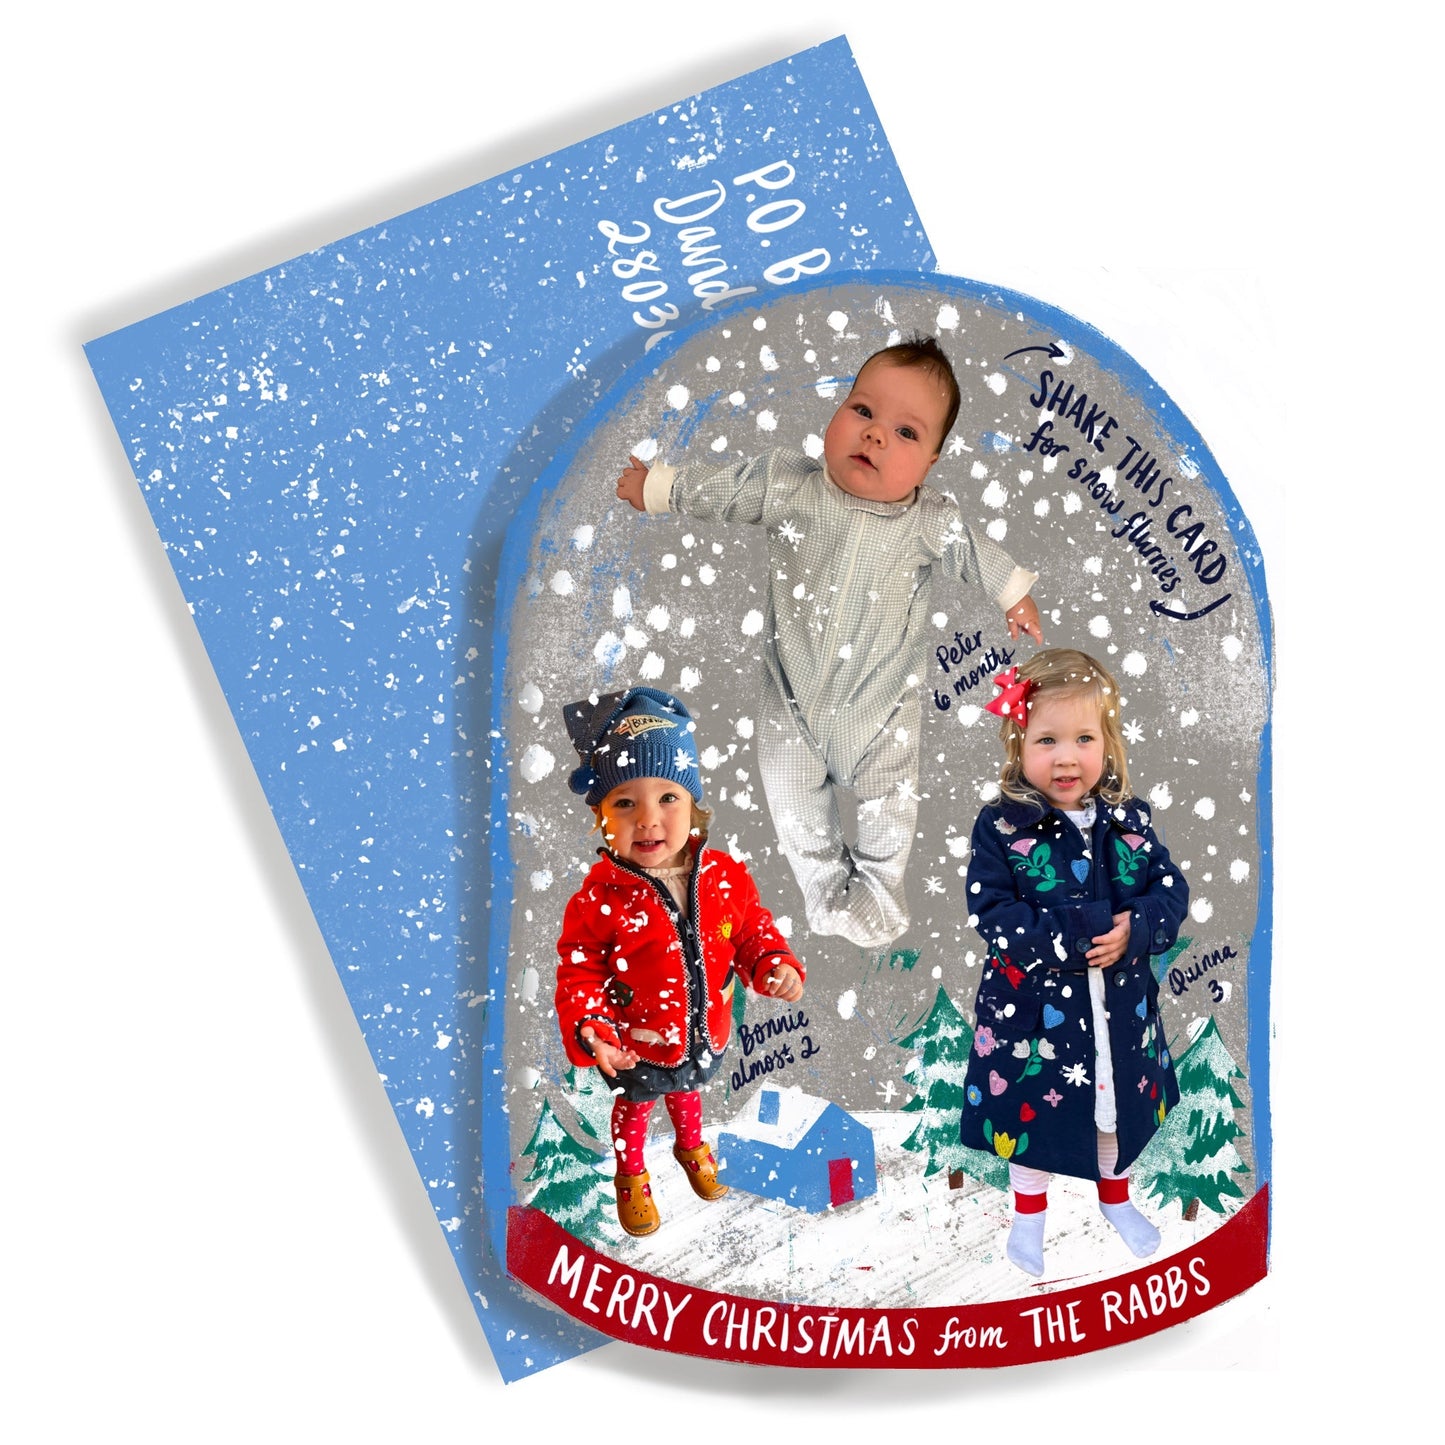 PRECUTTING of Snow Globe Christmas Cards